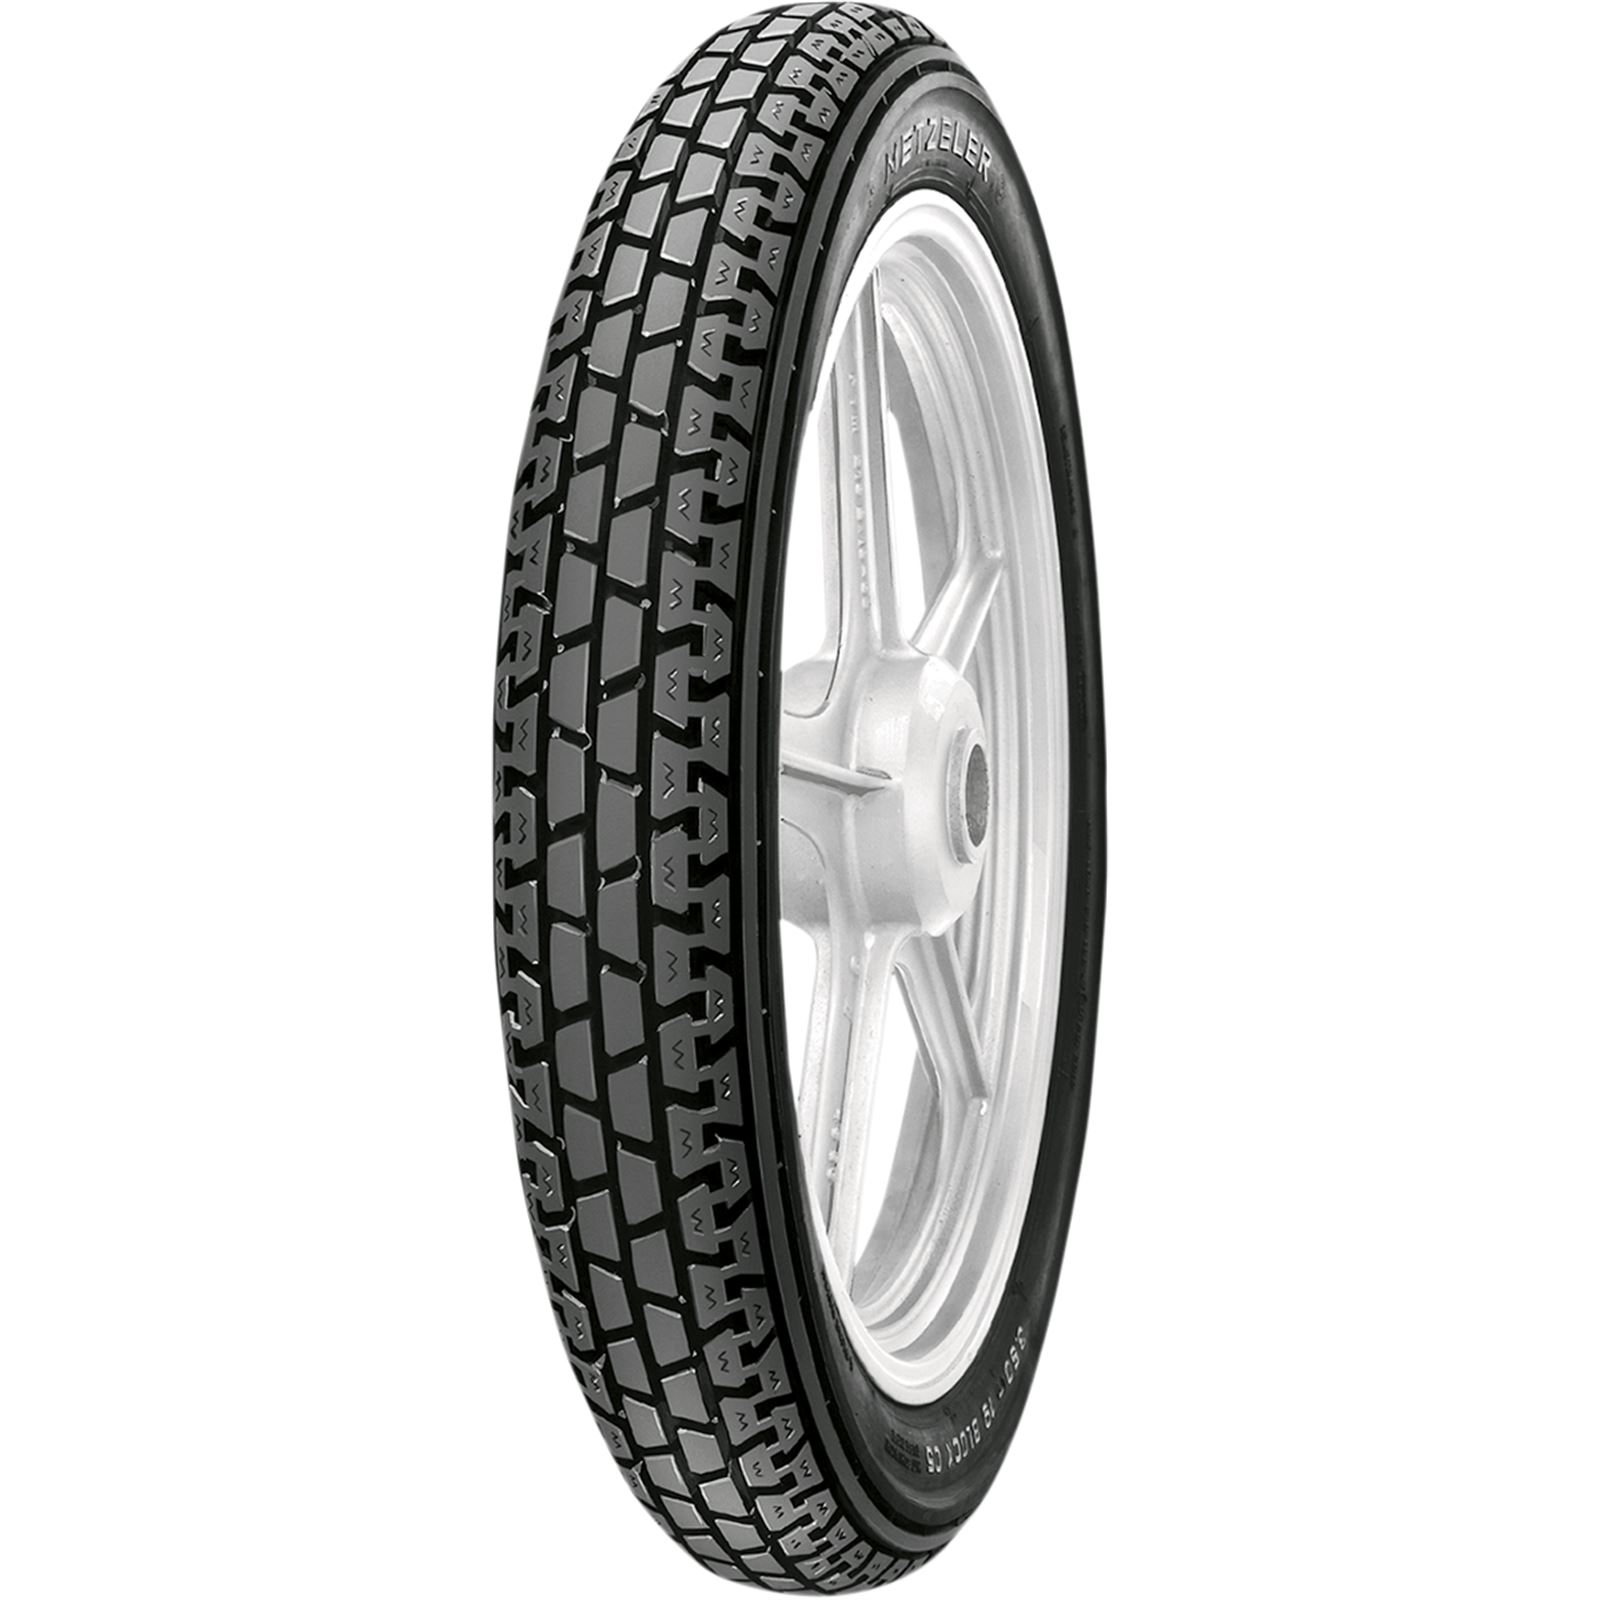 Metzeler Tire Black 3.50-18 56S - Front/Rear